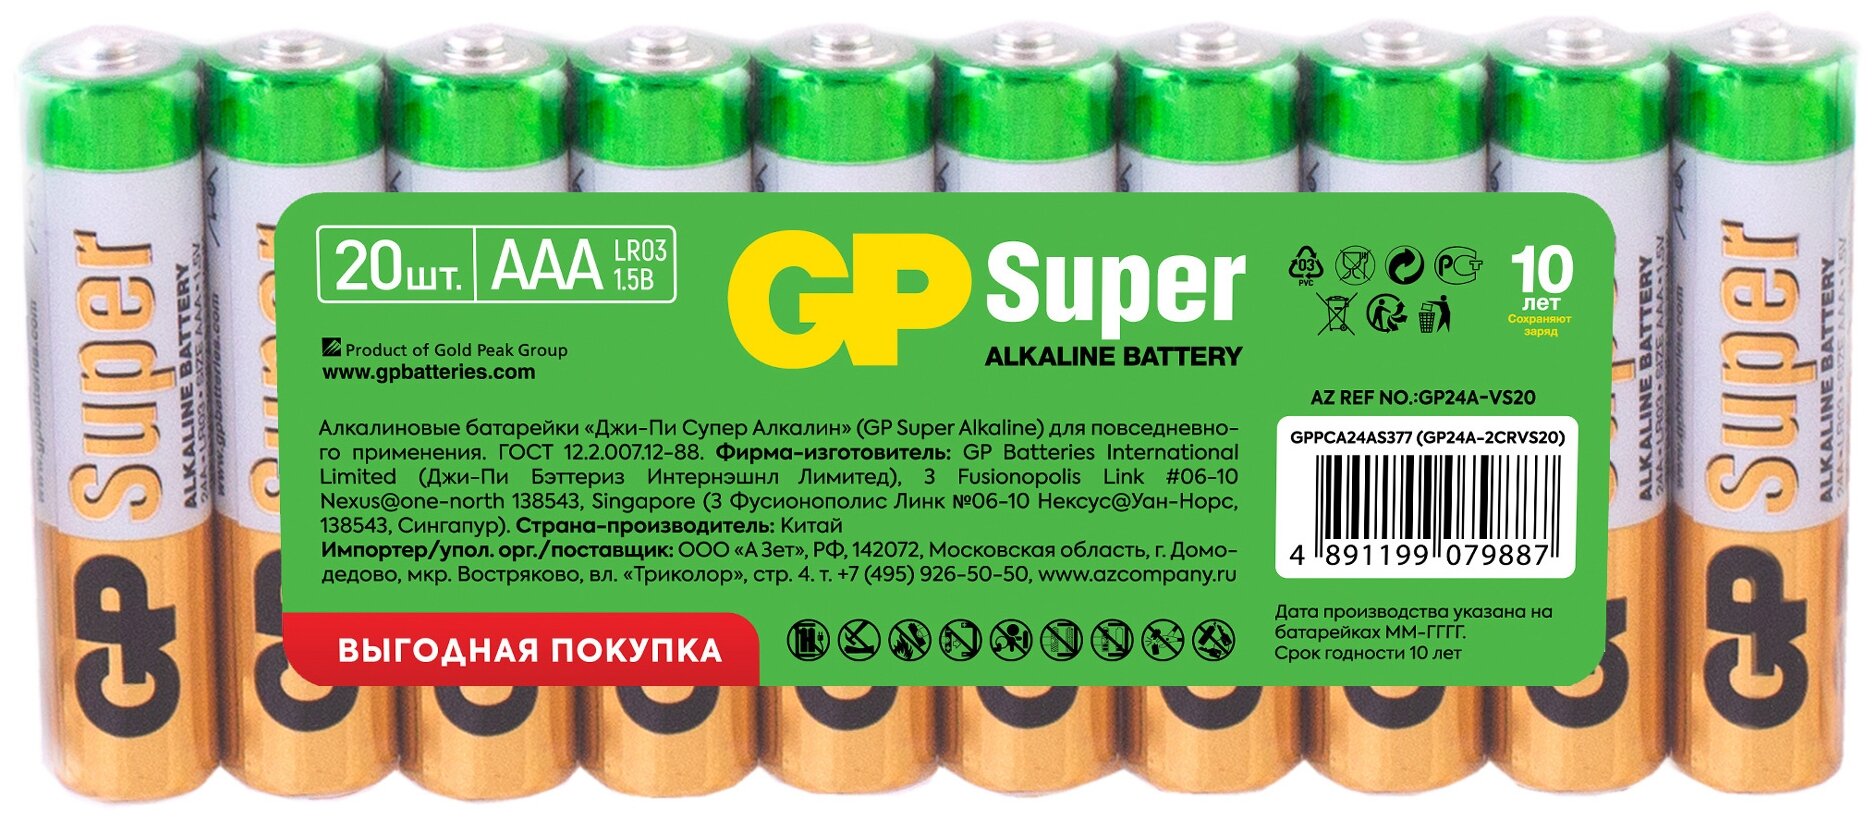 Батарейки GP - фото №9